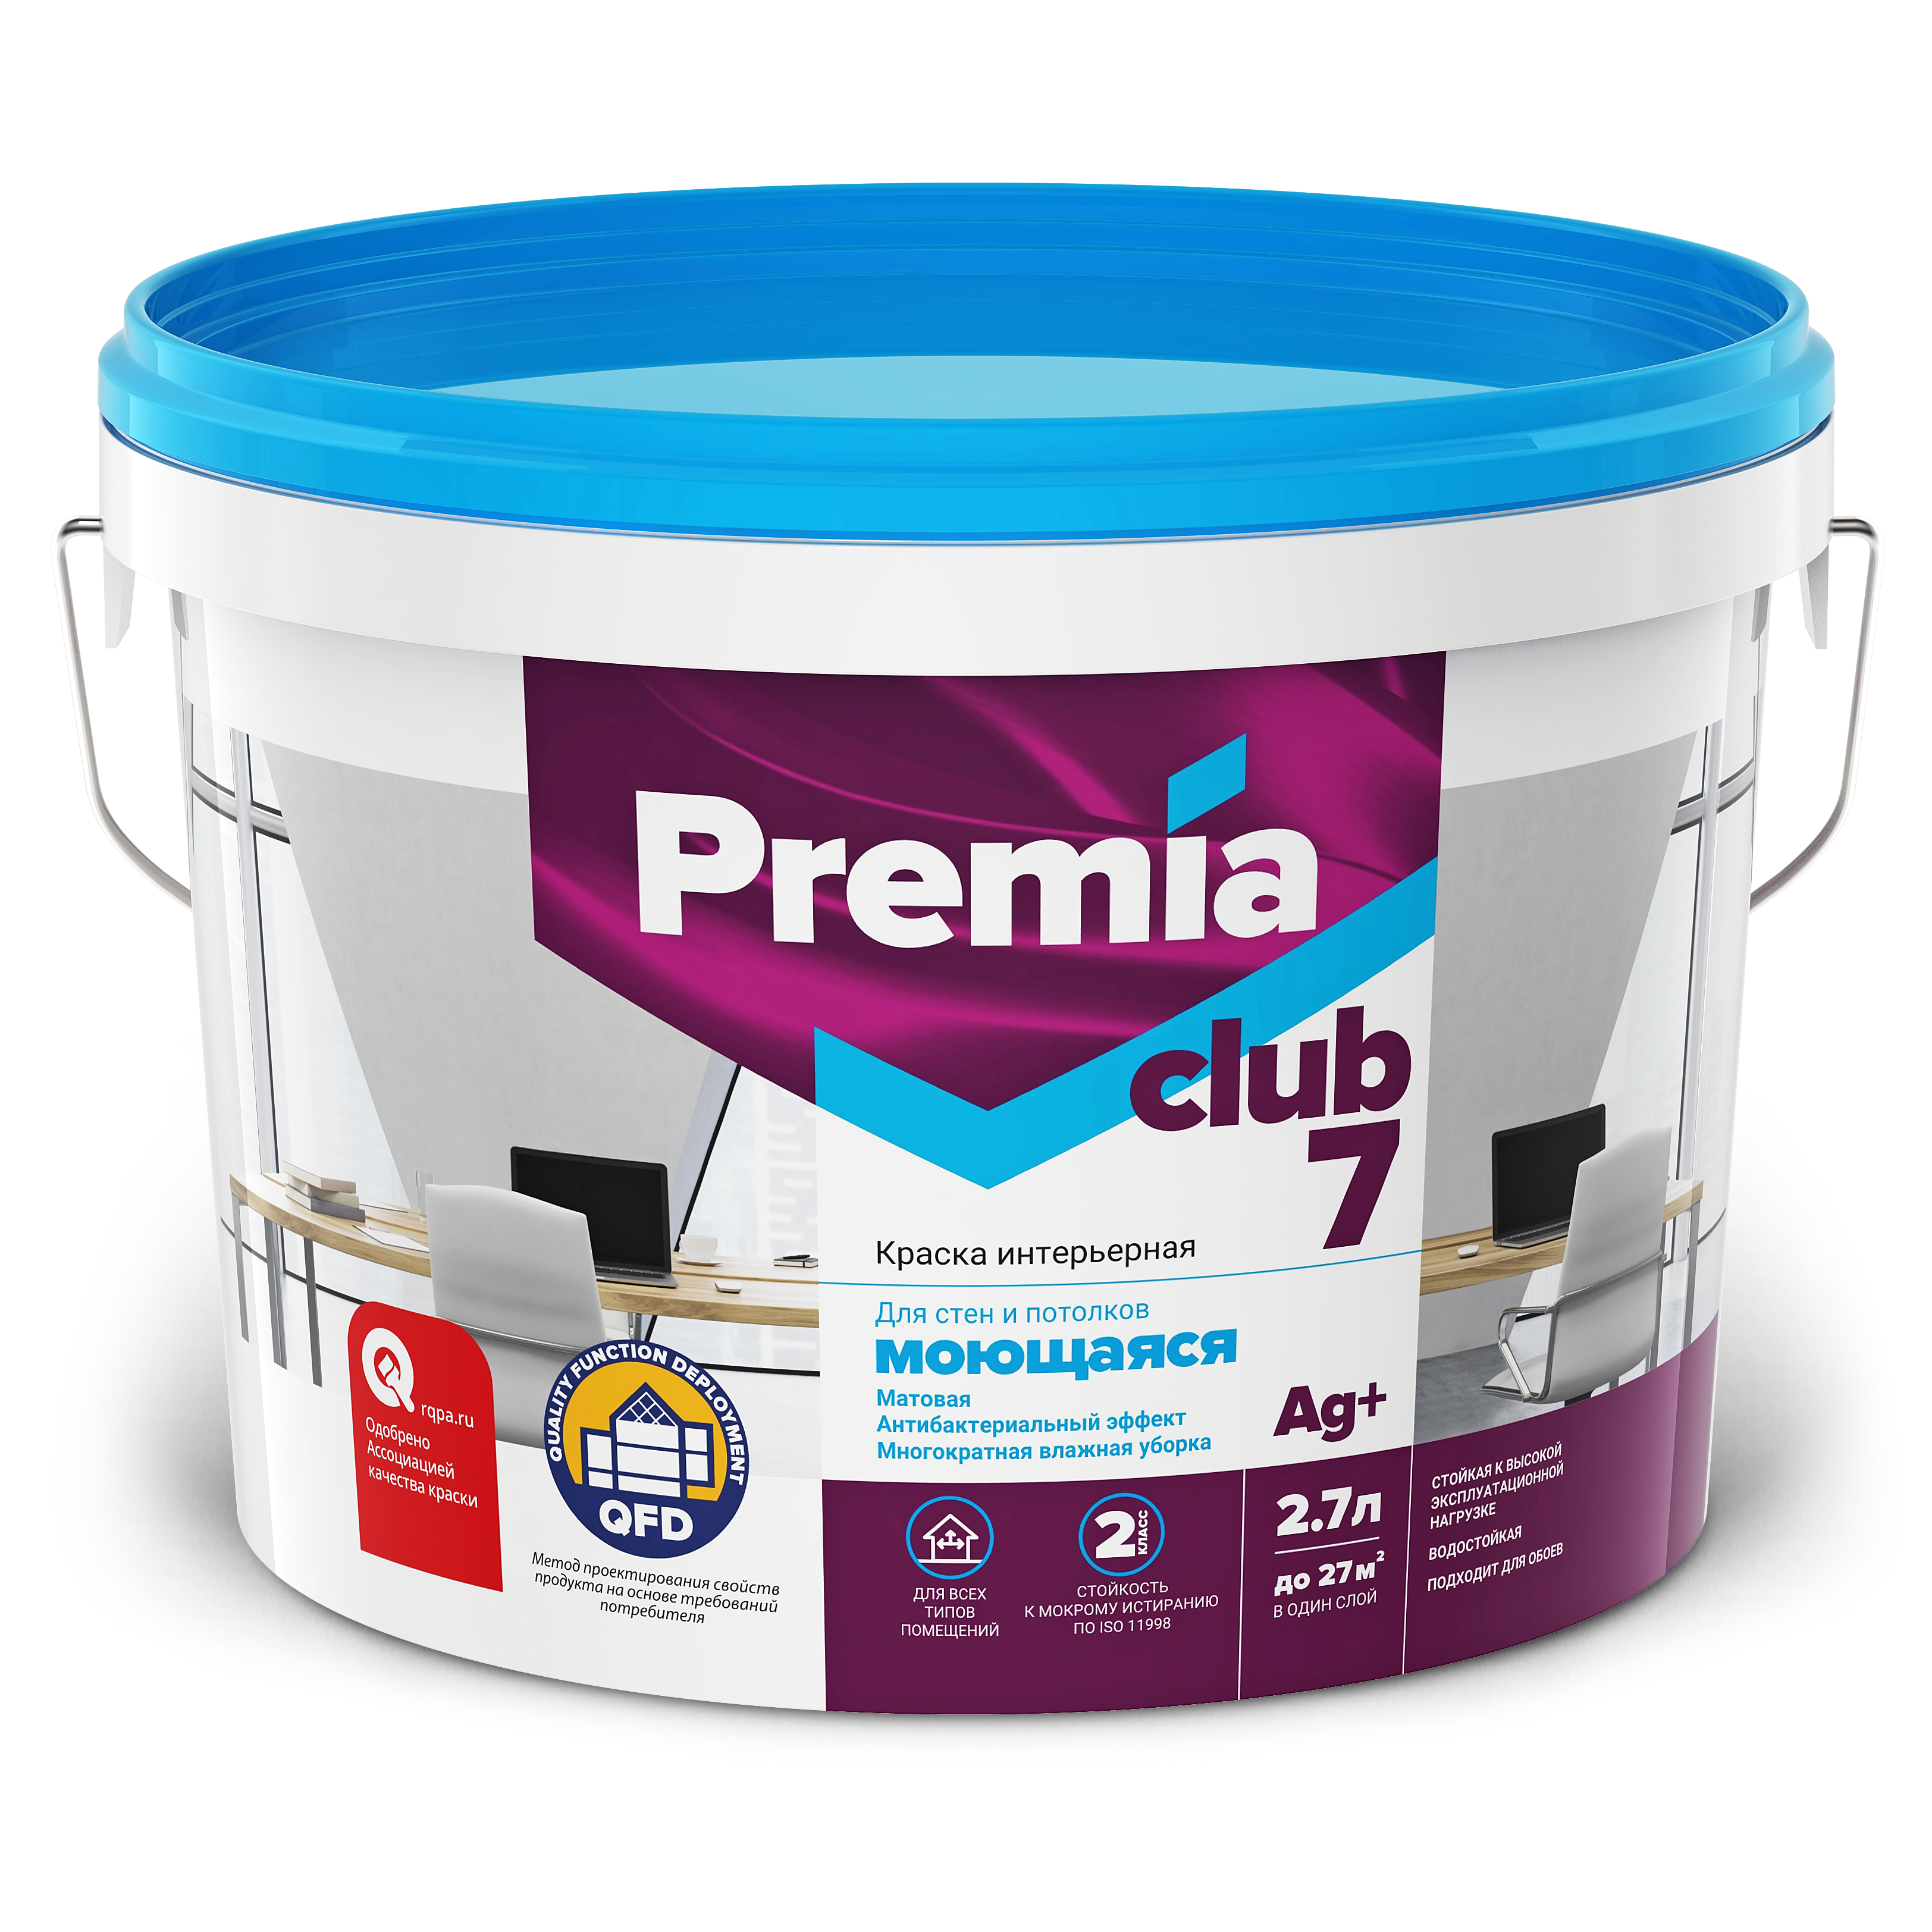 Краска PREMIA CLUB 7 для стен и потолков моющаяся